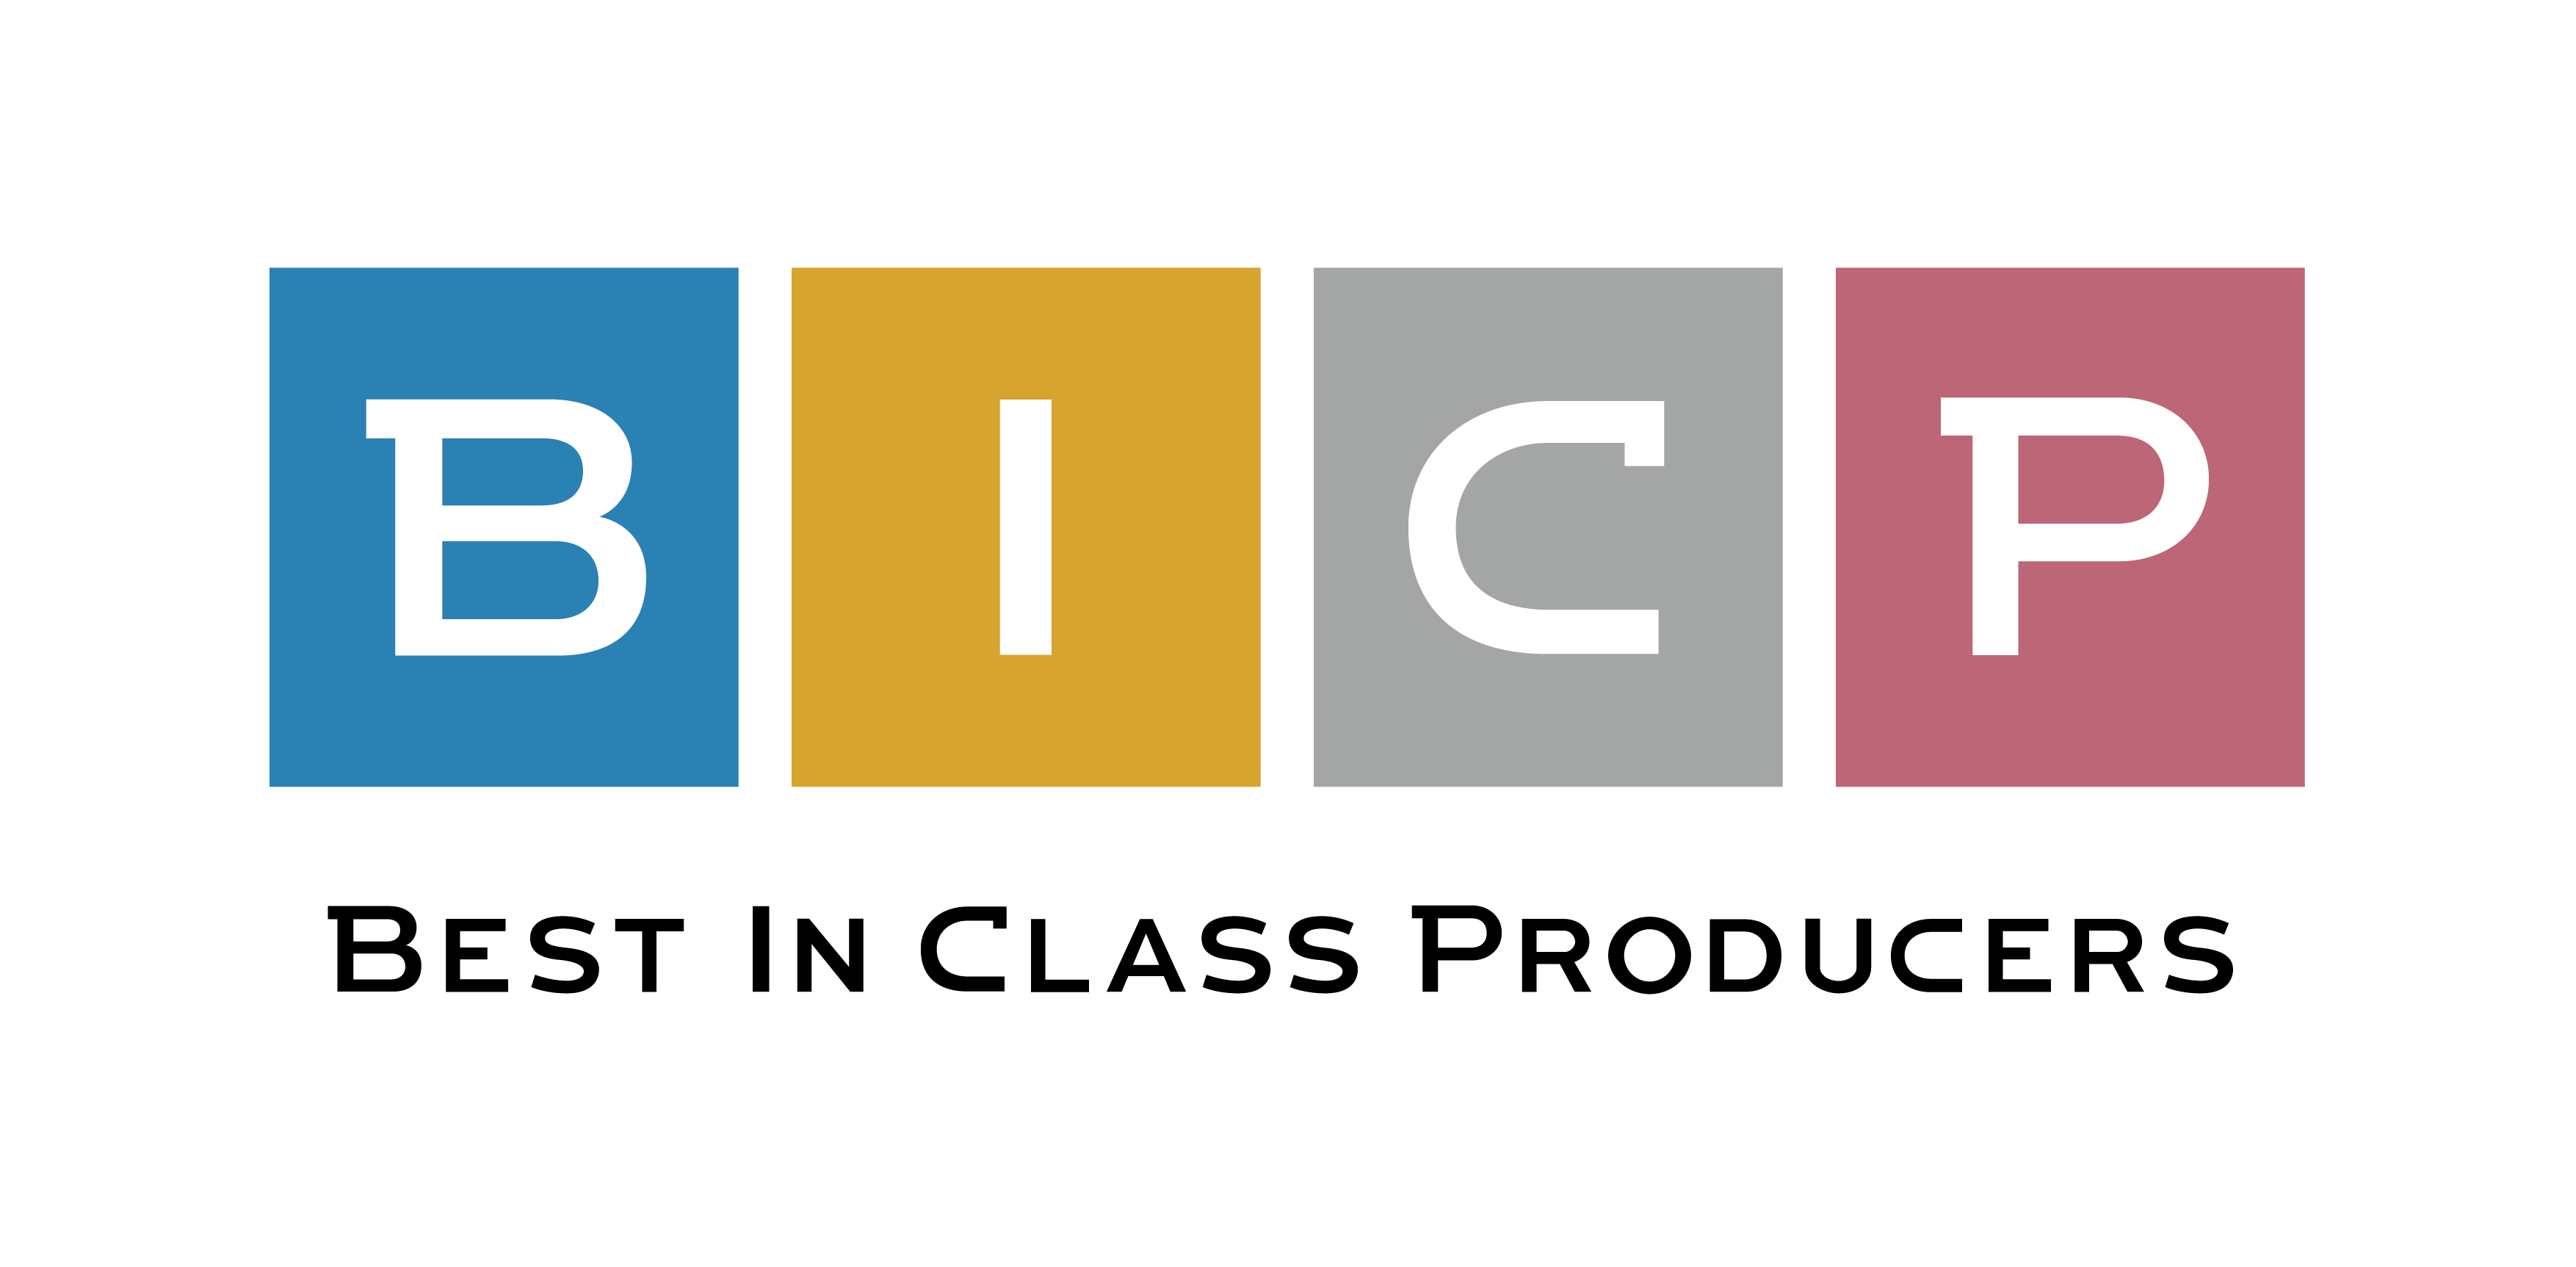 Best in Class Producers Co., Ltd.